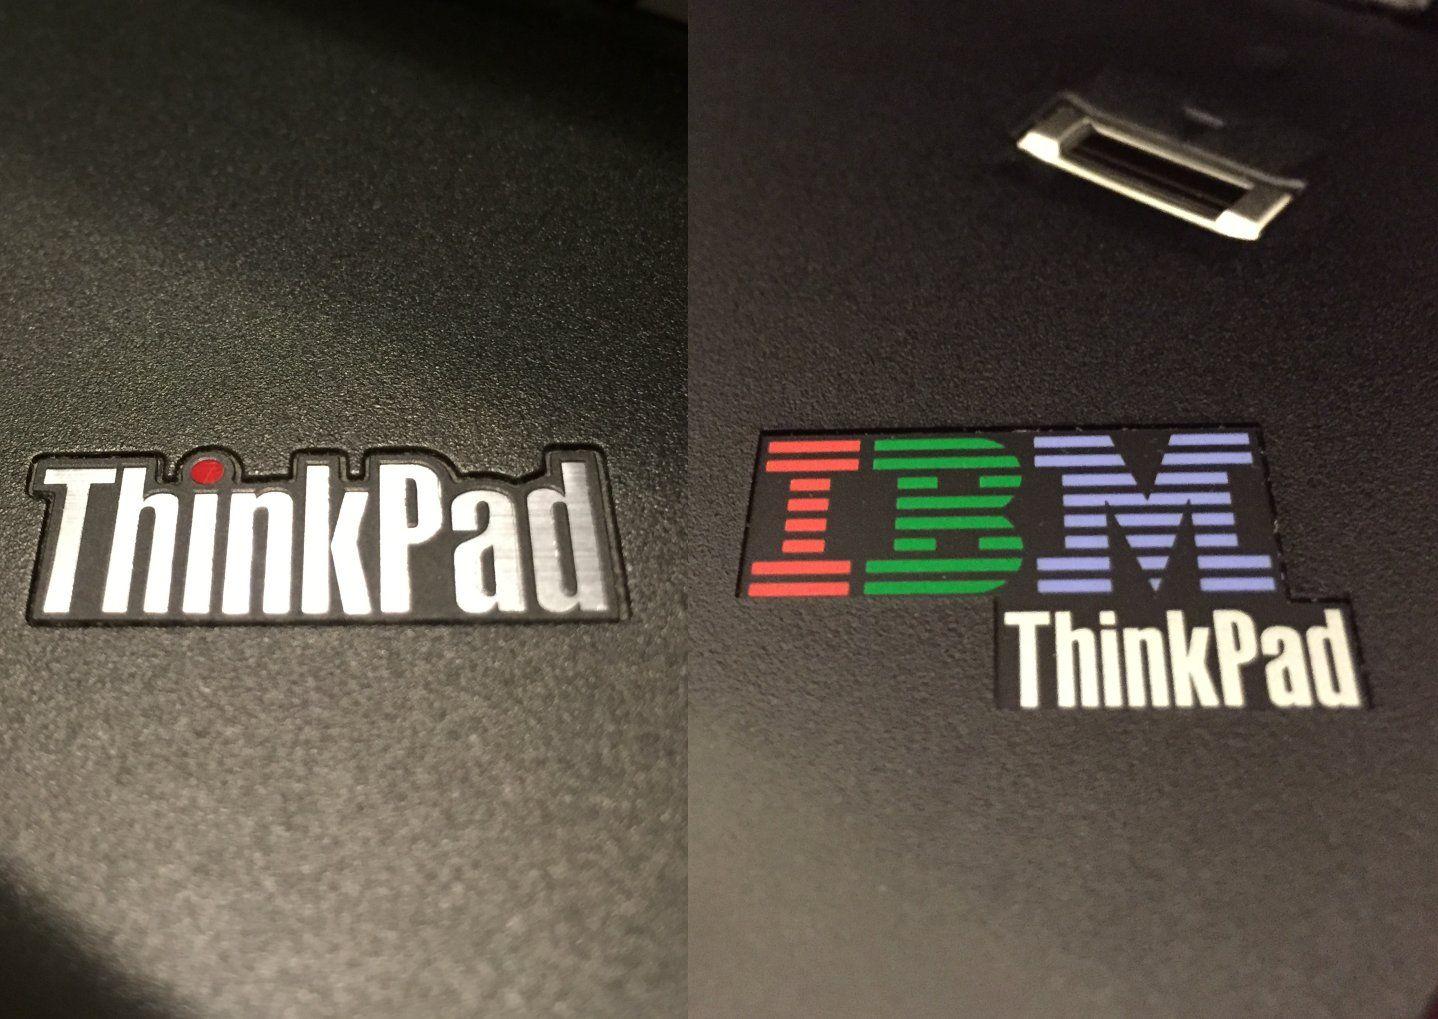 Old Lenovo Logo - File:Thinkpad logo comparison.jpg - Wikimedia Commons